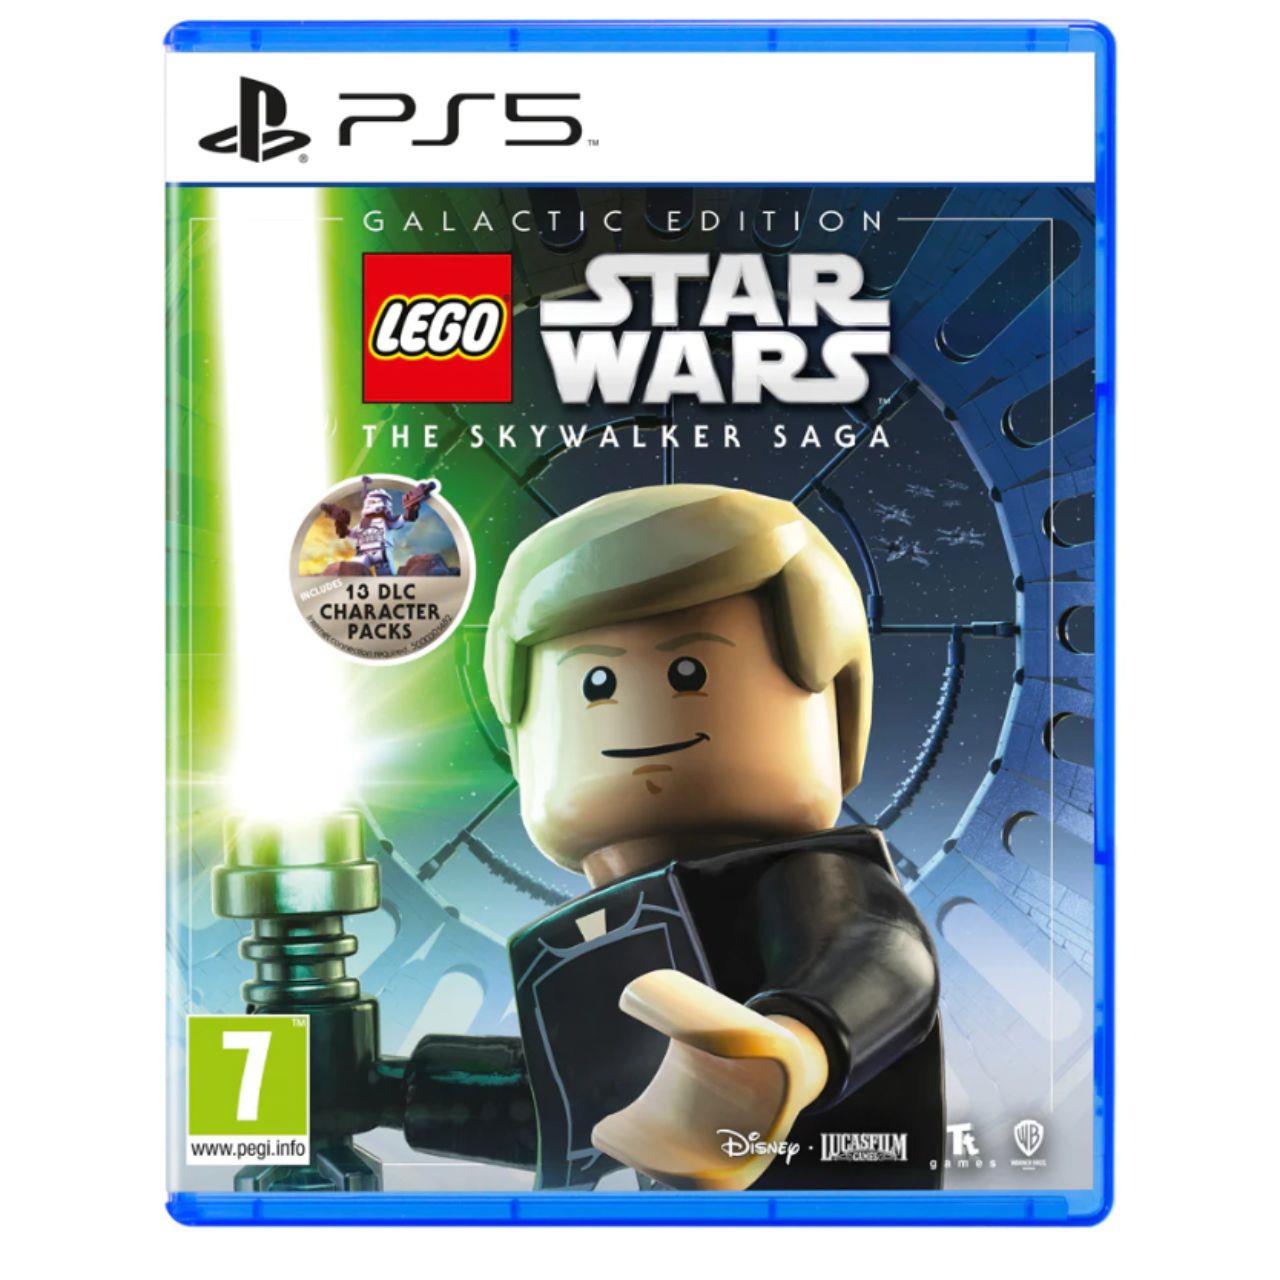 LEGO Star Wars The Skywalker Saga Galactic Edition PS5 Game